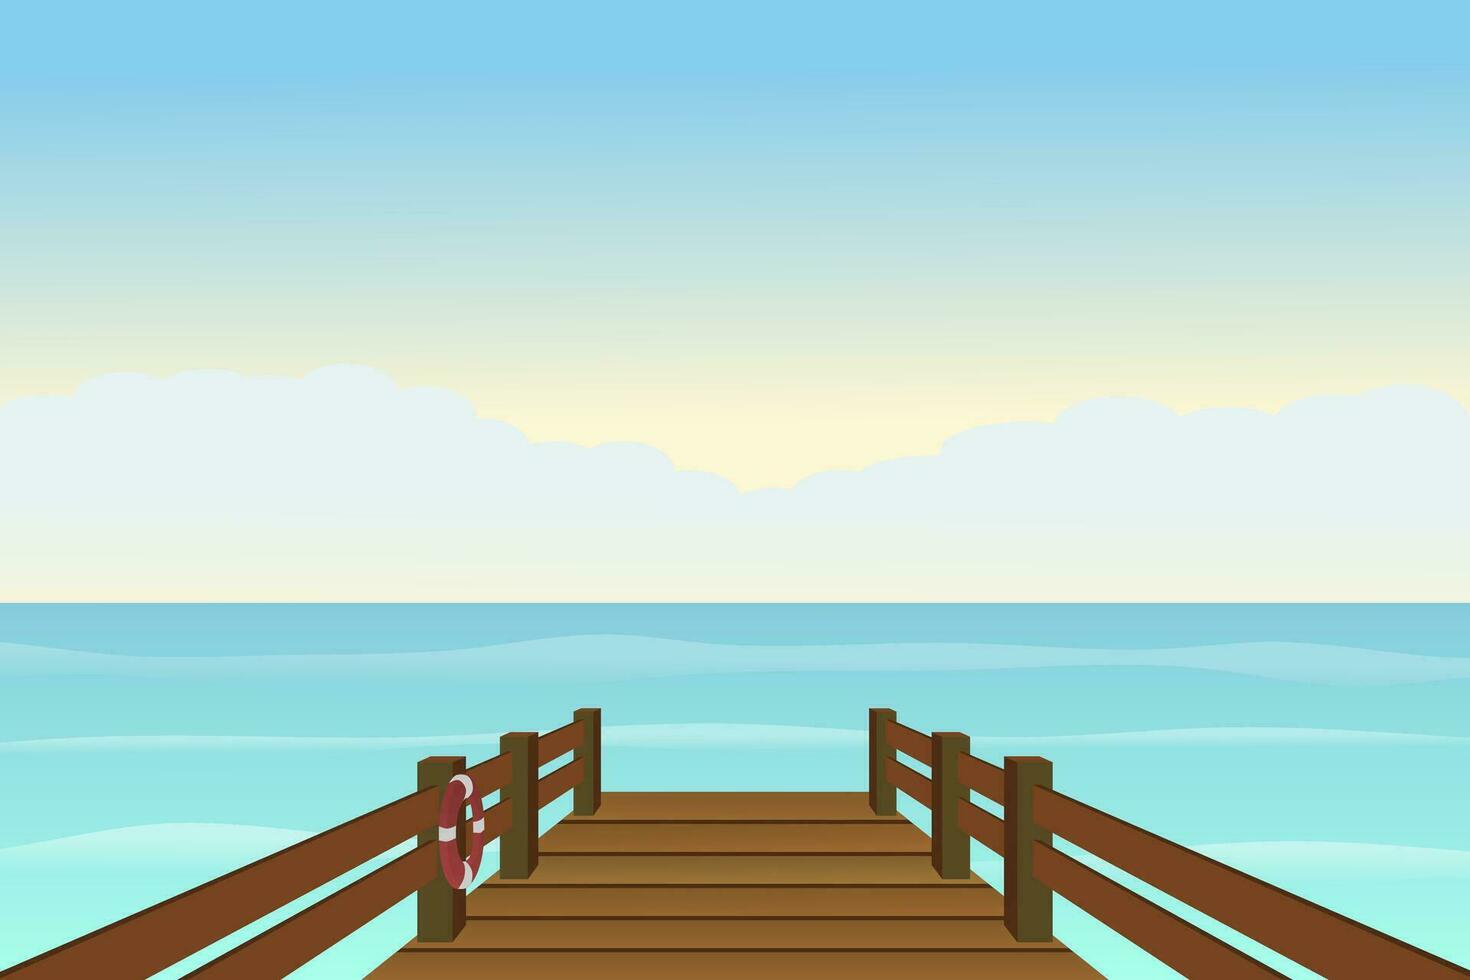 Strand hölzern Seebrücke mit Rettungsring auf sonnig Tag. Vektor Illustration.